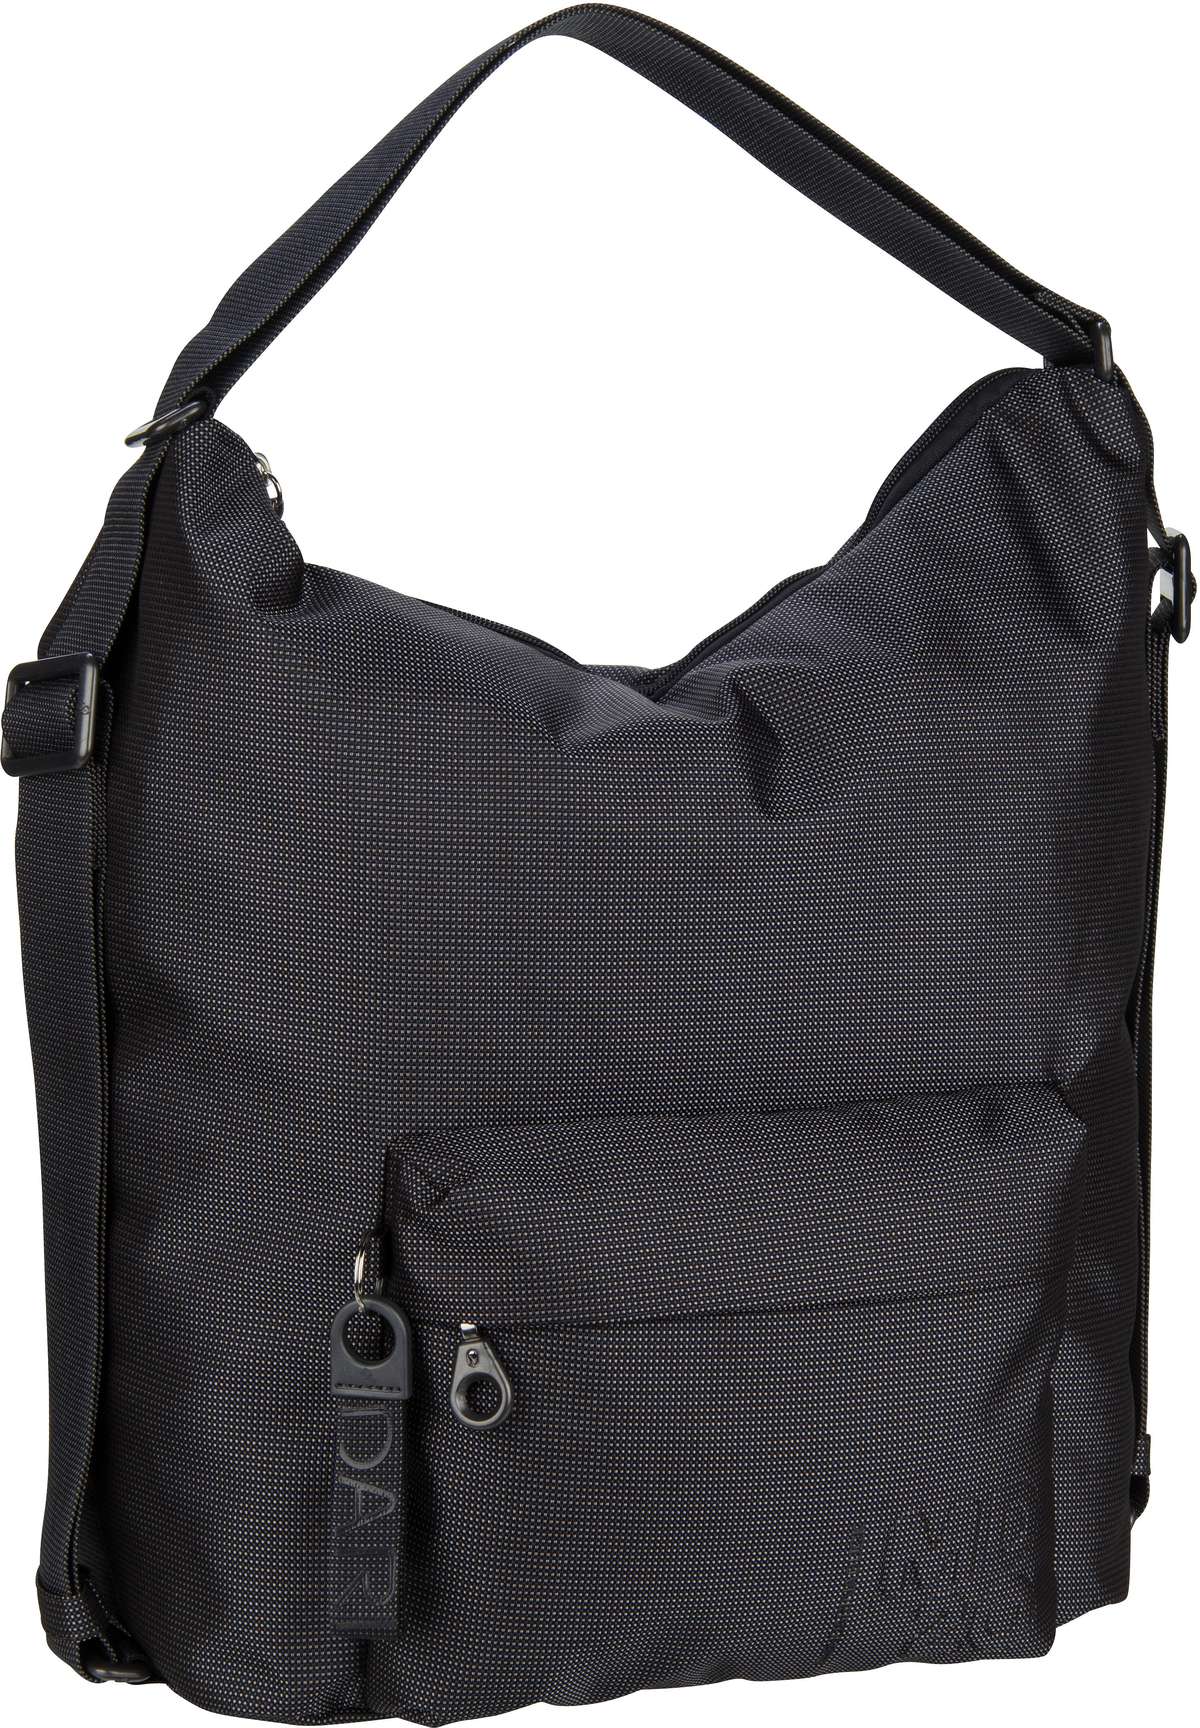 Mandarina Duck MD20 Hobo Backpack QMT09  in Steel (16.3 Liter), Rucksack / Backpack